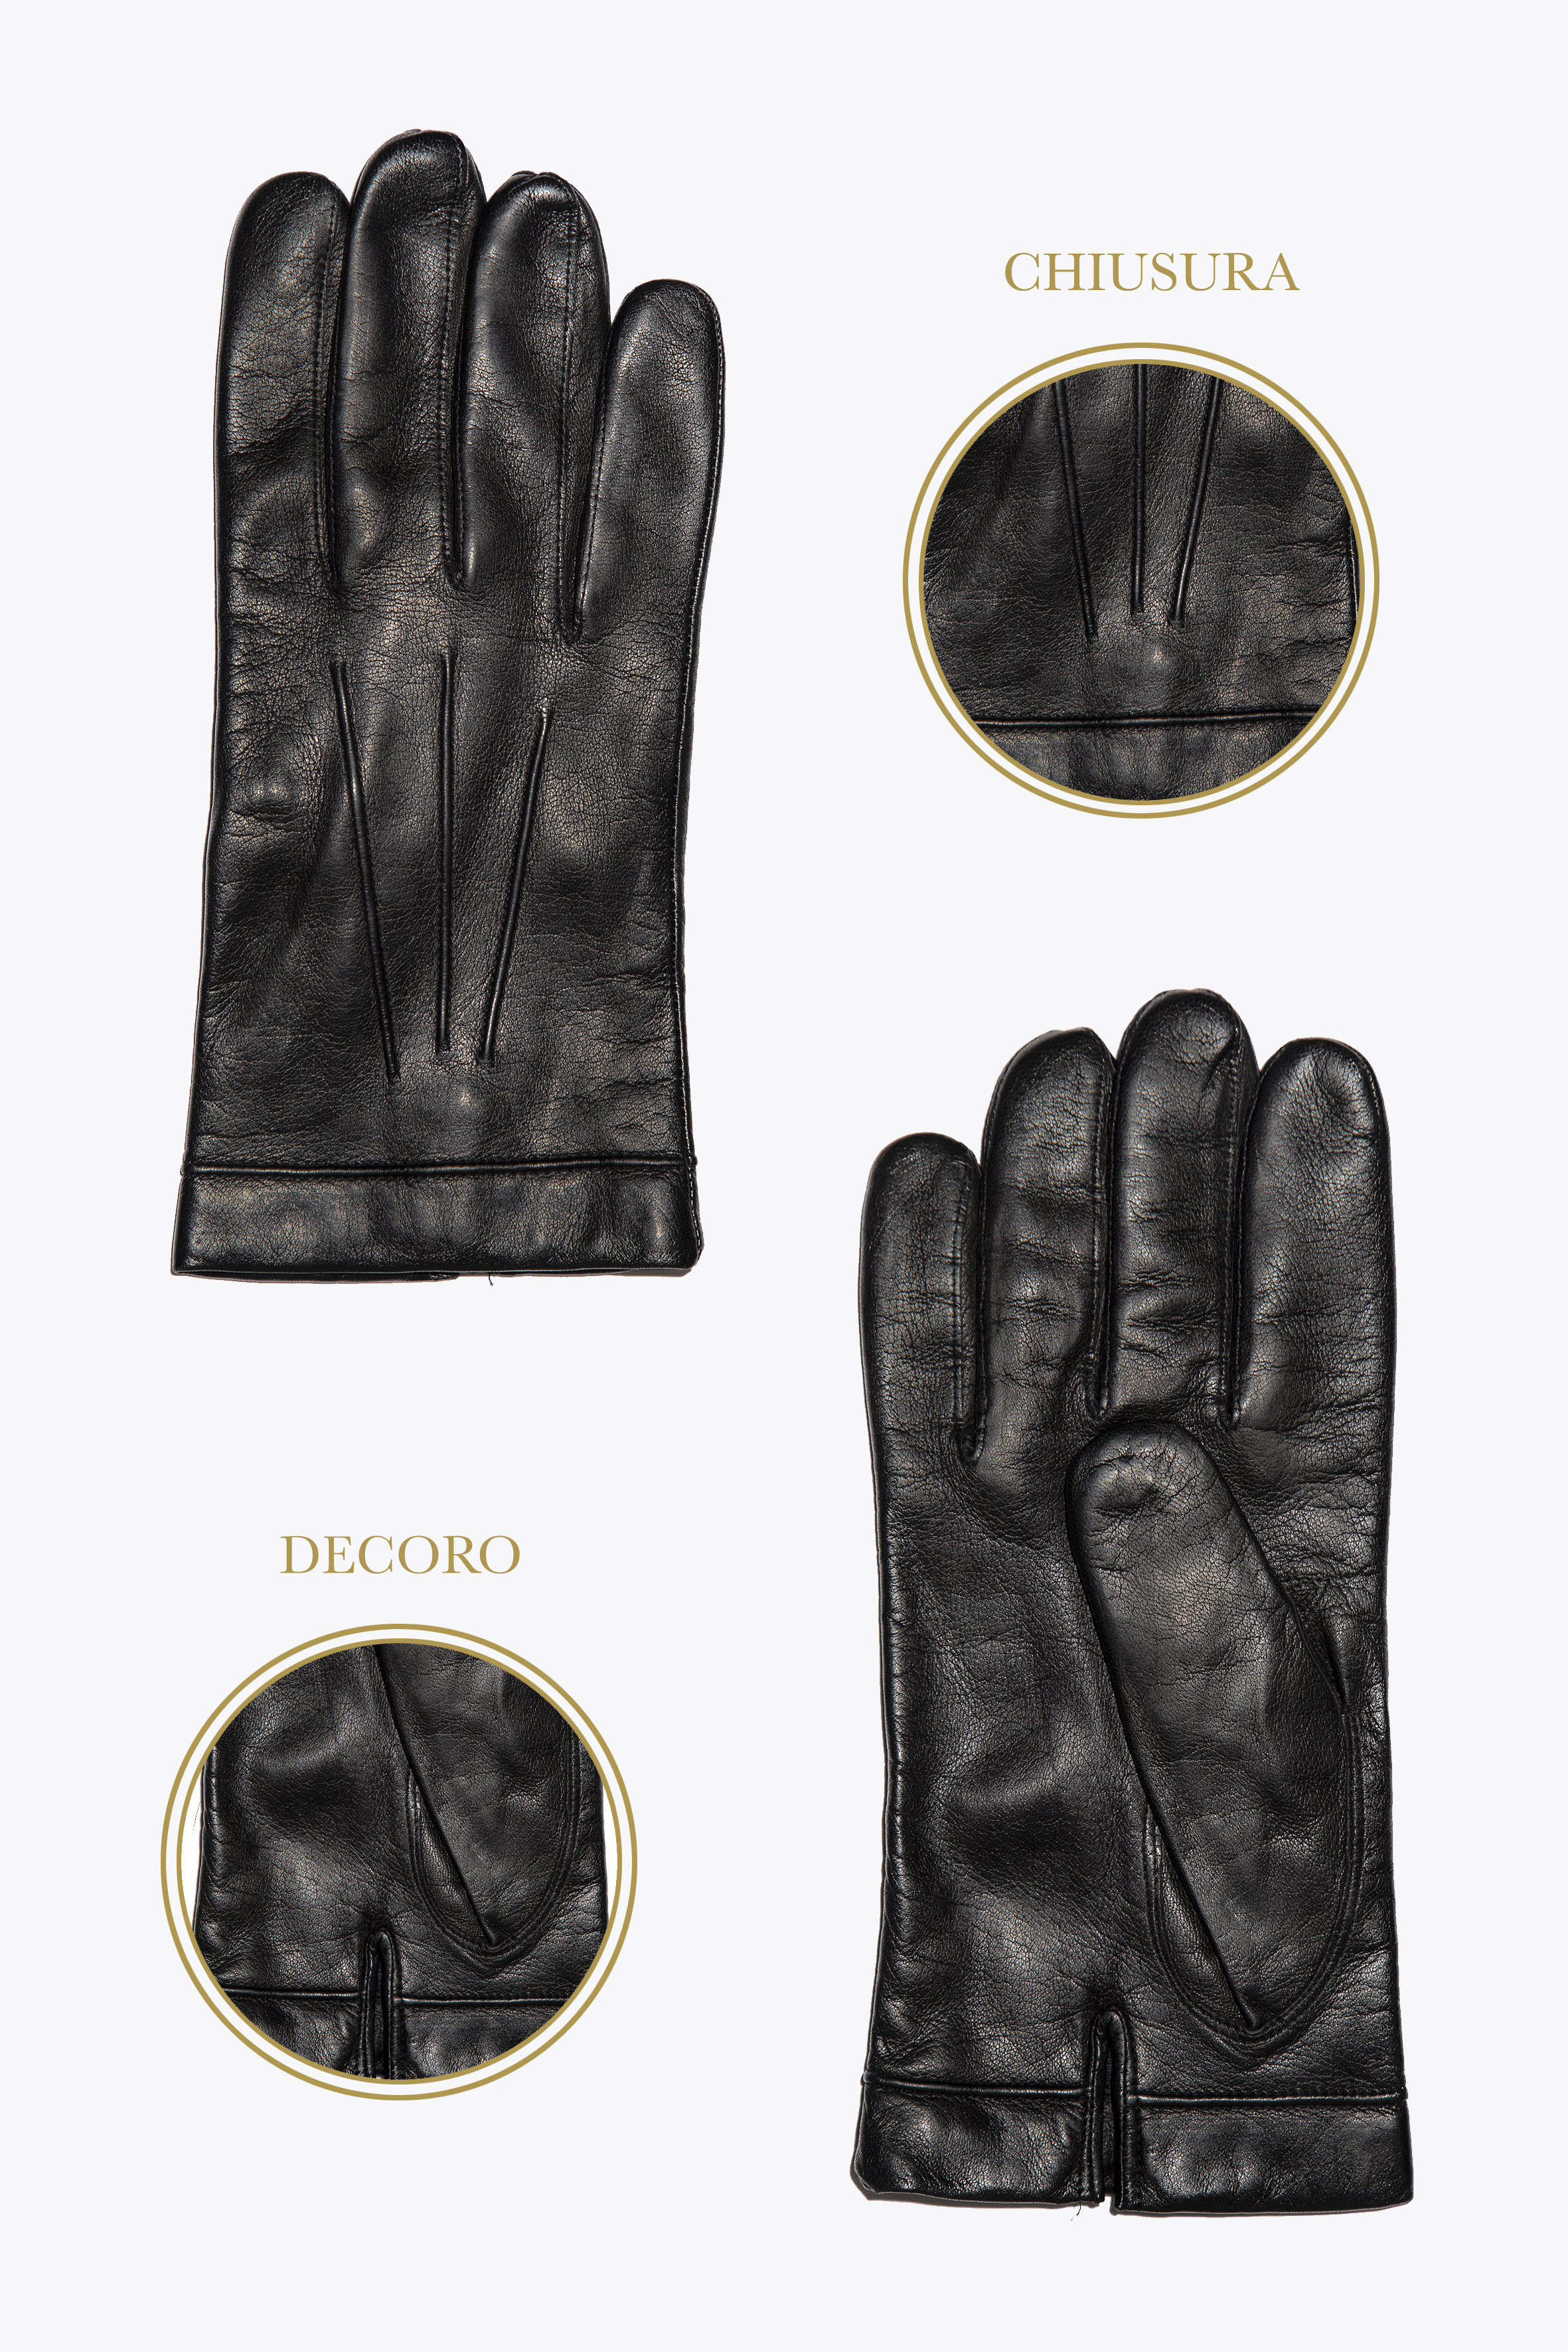 Guanti in pelle da UOMO Classico M10  ELVIFRA fashion accessories handmade  in Italy store online